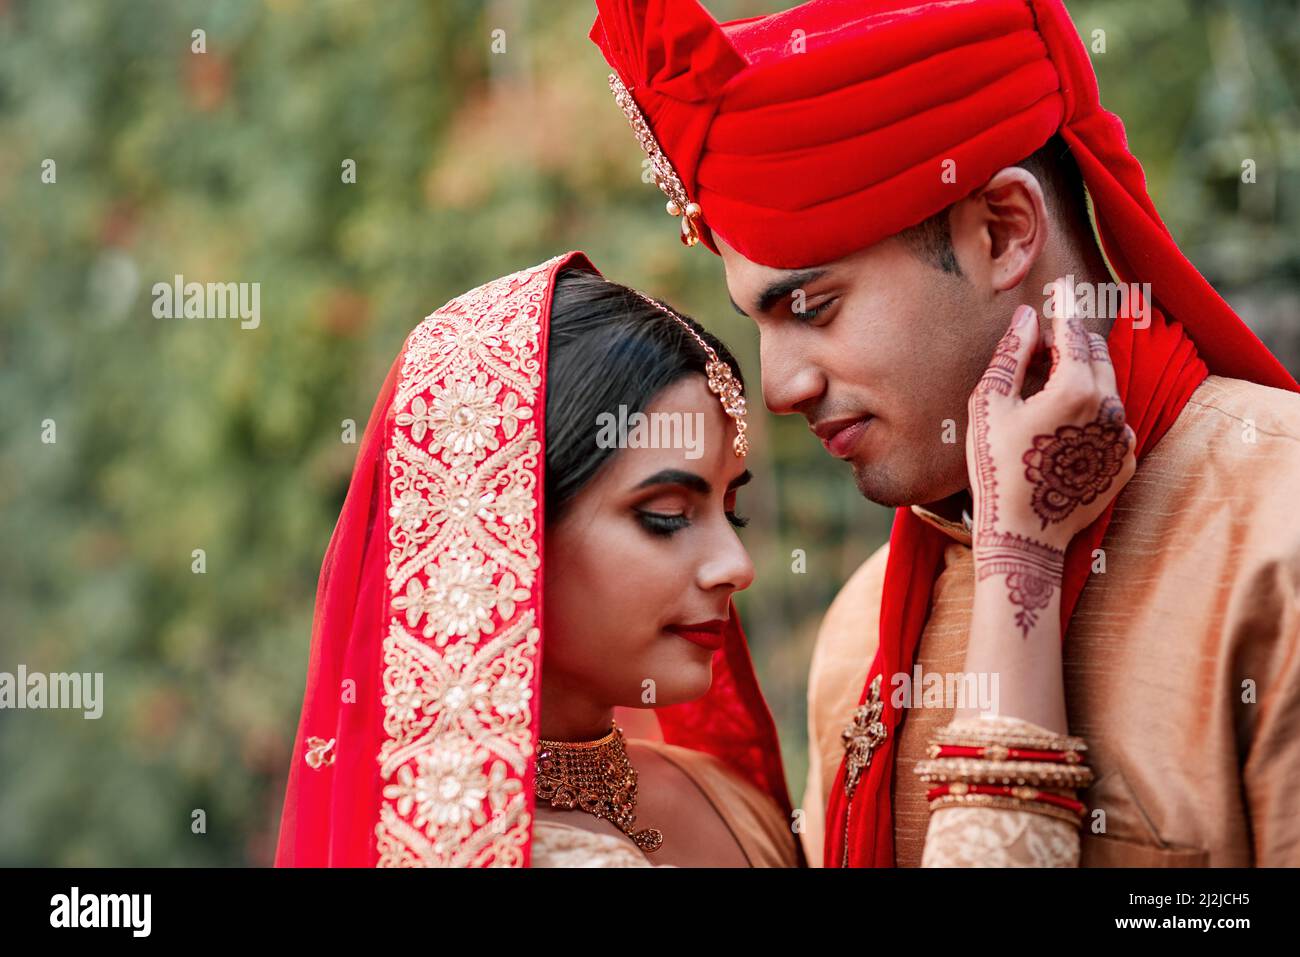 Indian wedding couple Stock Photos, Royalty Free Indian wedding couple  Images | Depositphotos